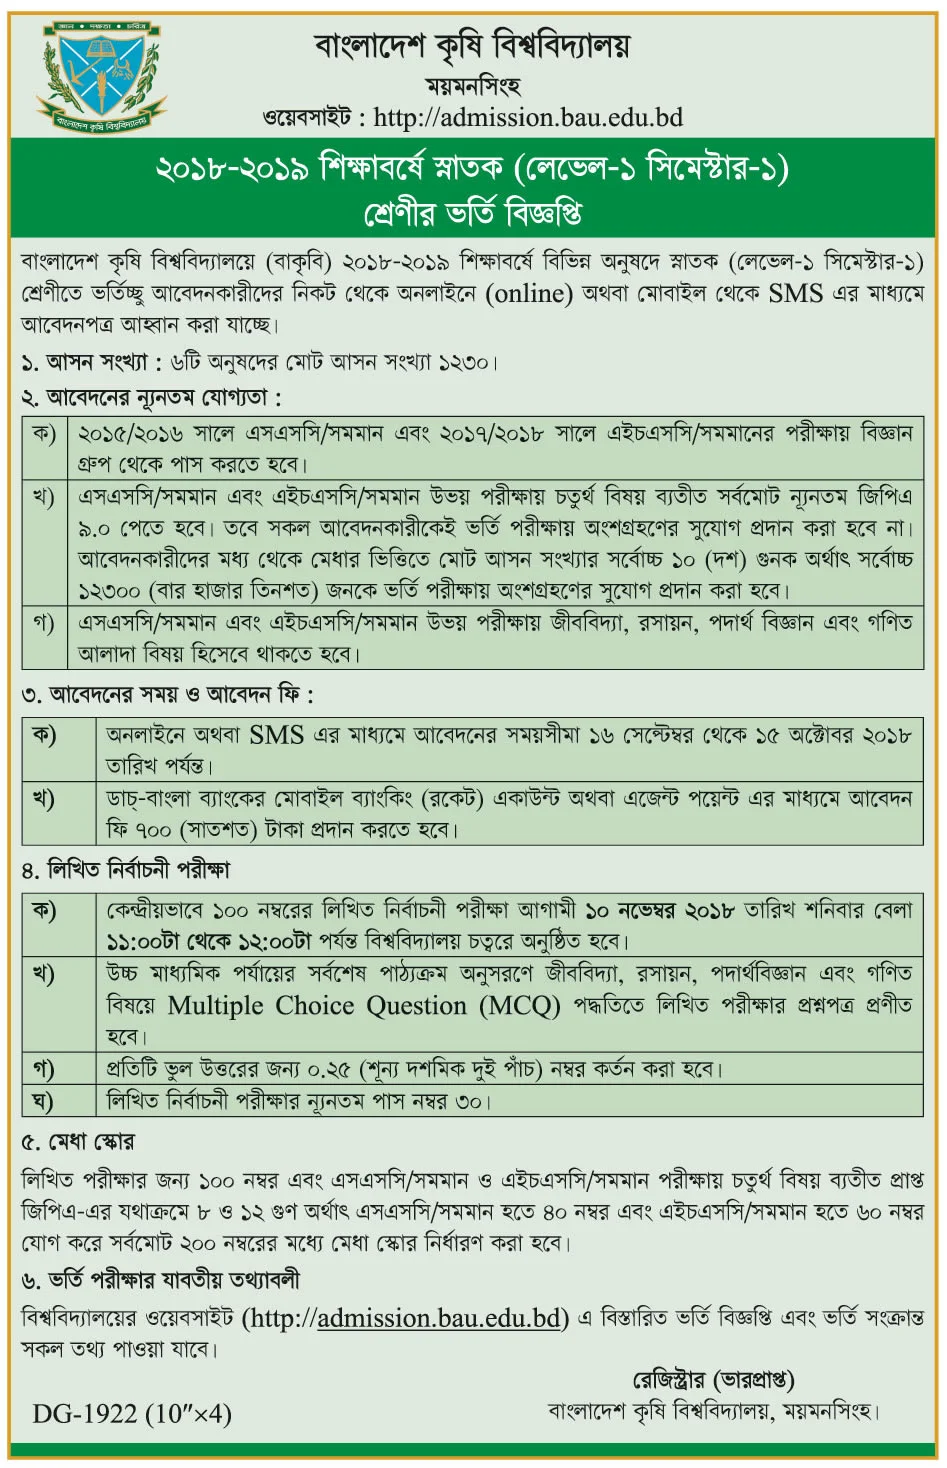 Bangladesh Agricultural University Admission Circular 2018-2019